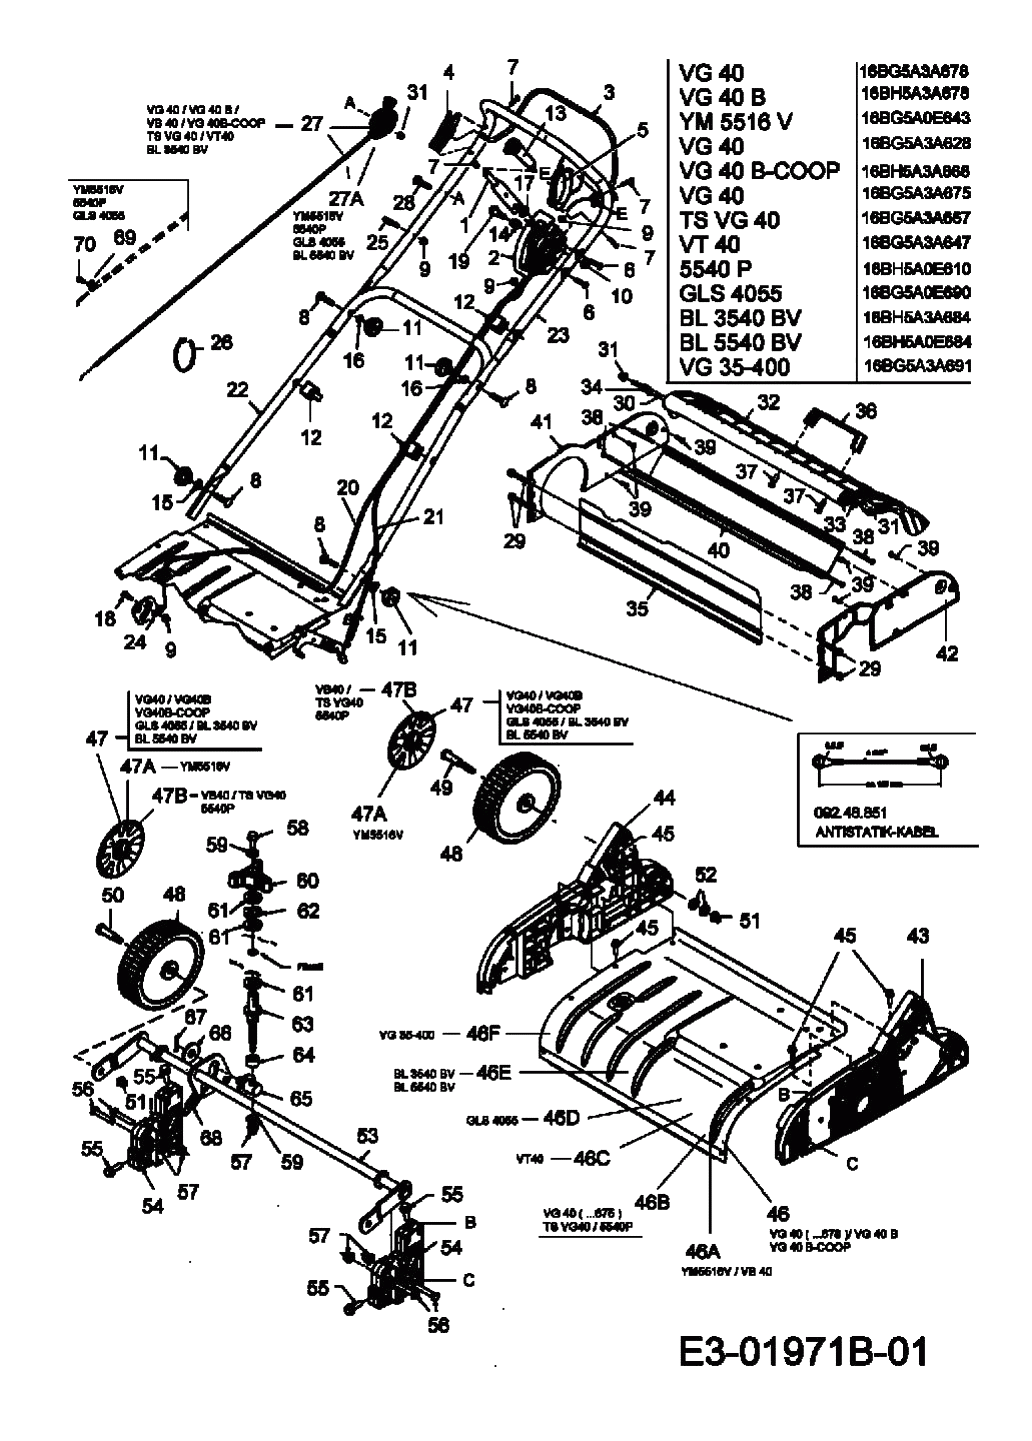 MTD Артикул 16BG5A0E678 (год выпуска 2007). Ручка, регулятор высоты, колеса